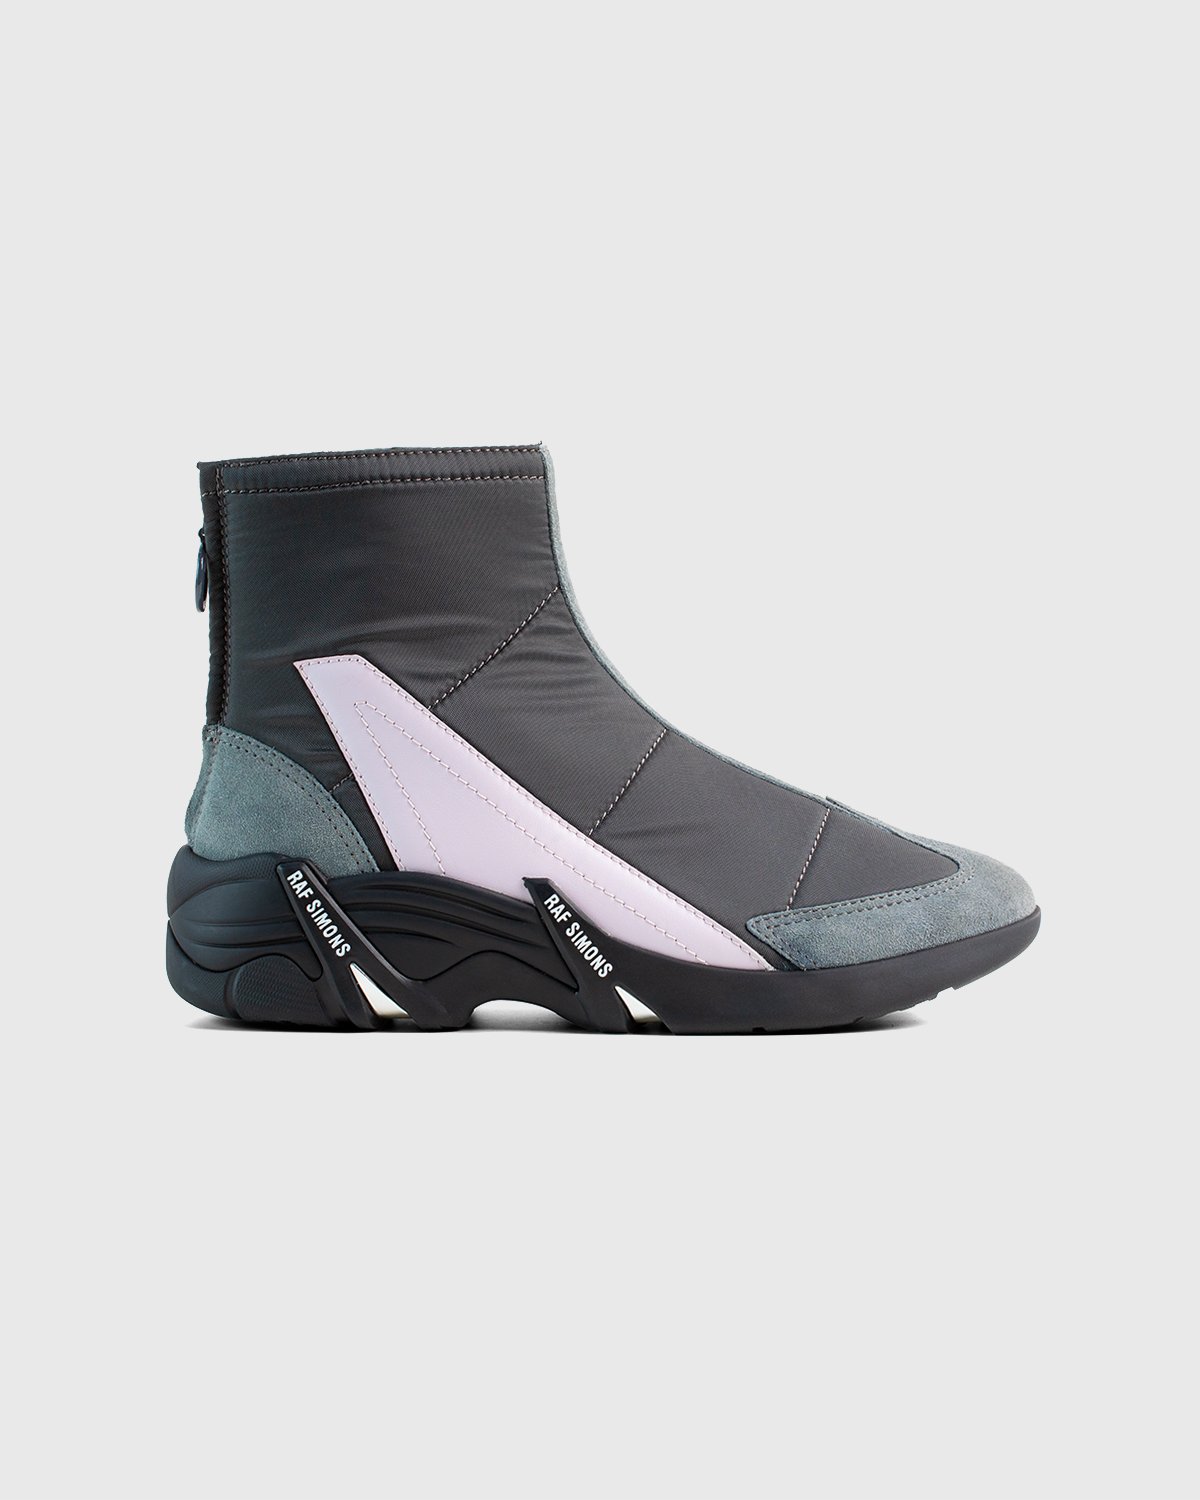 Raf Simons - Cylon 22 Antracite - Footwear - Grey - Image 1